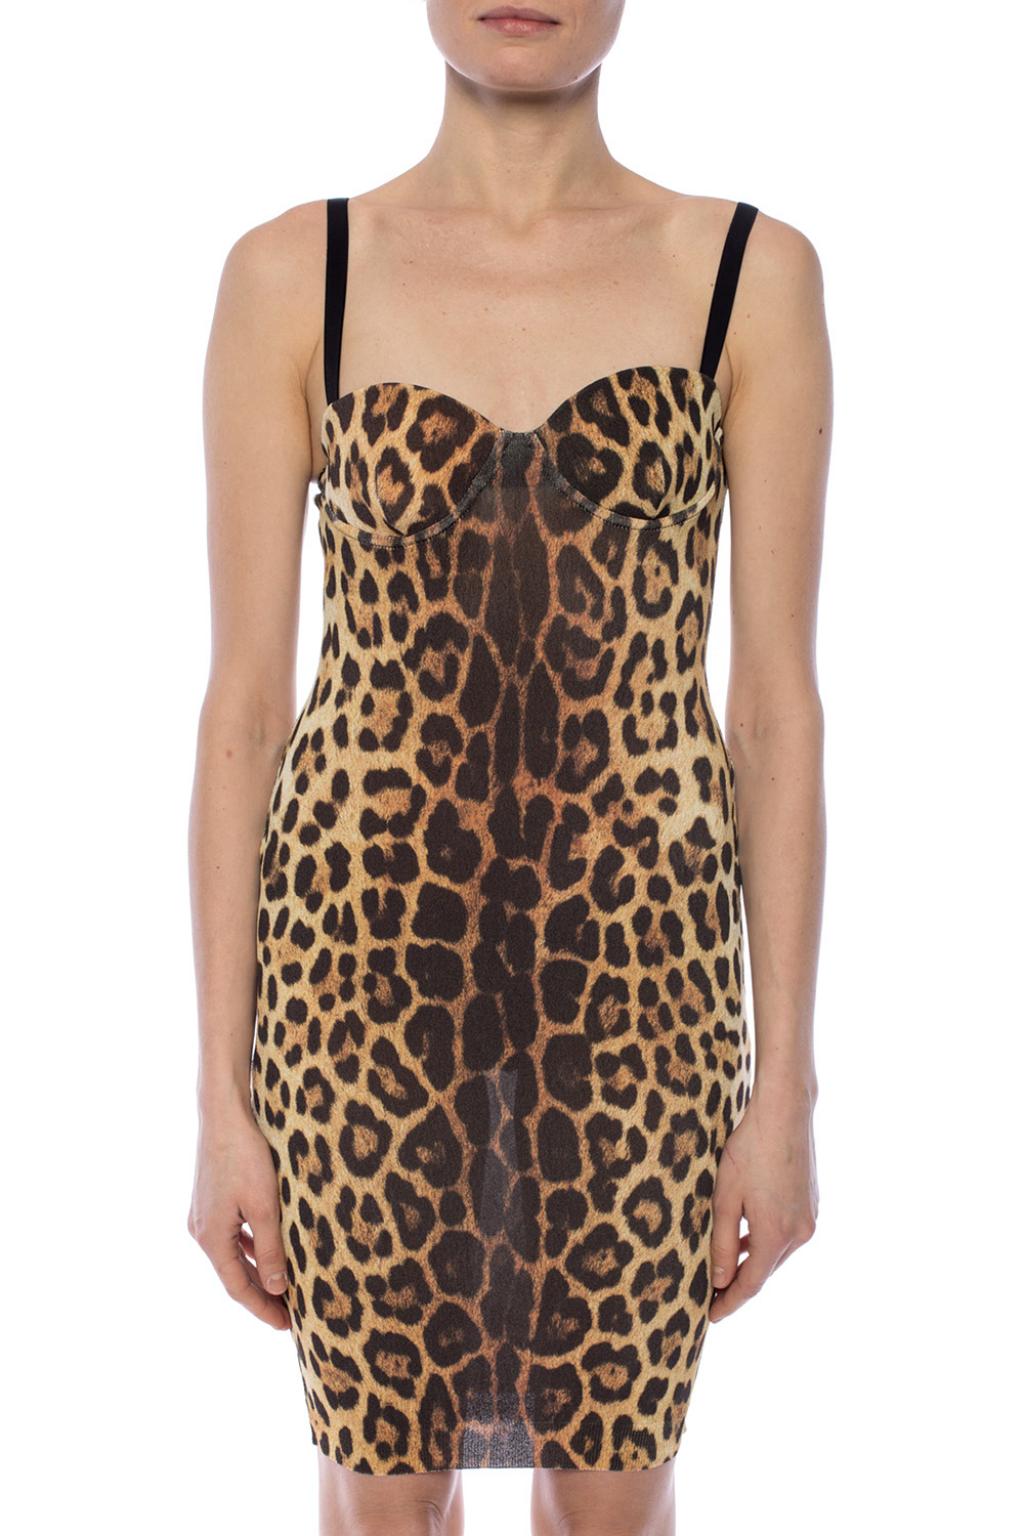 moschino leopard print dress